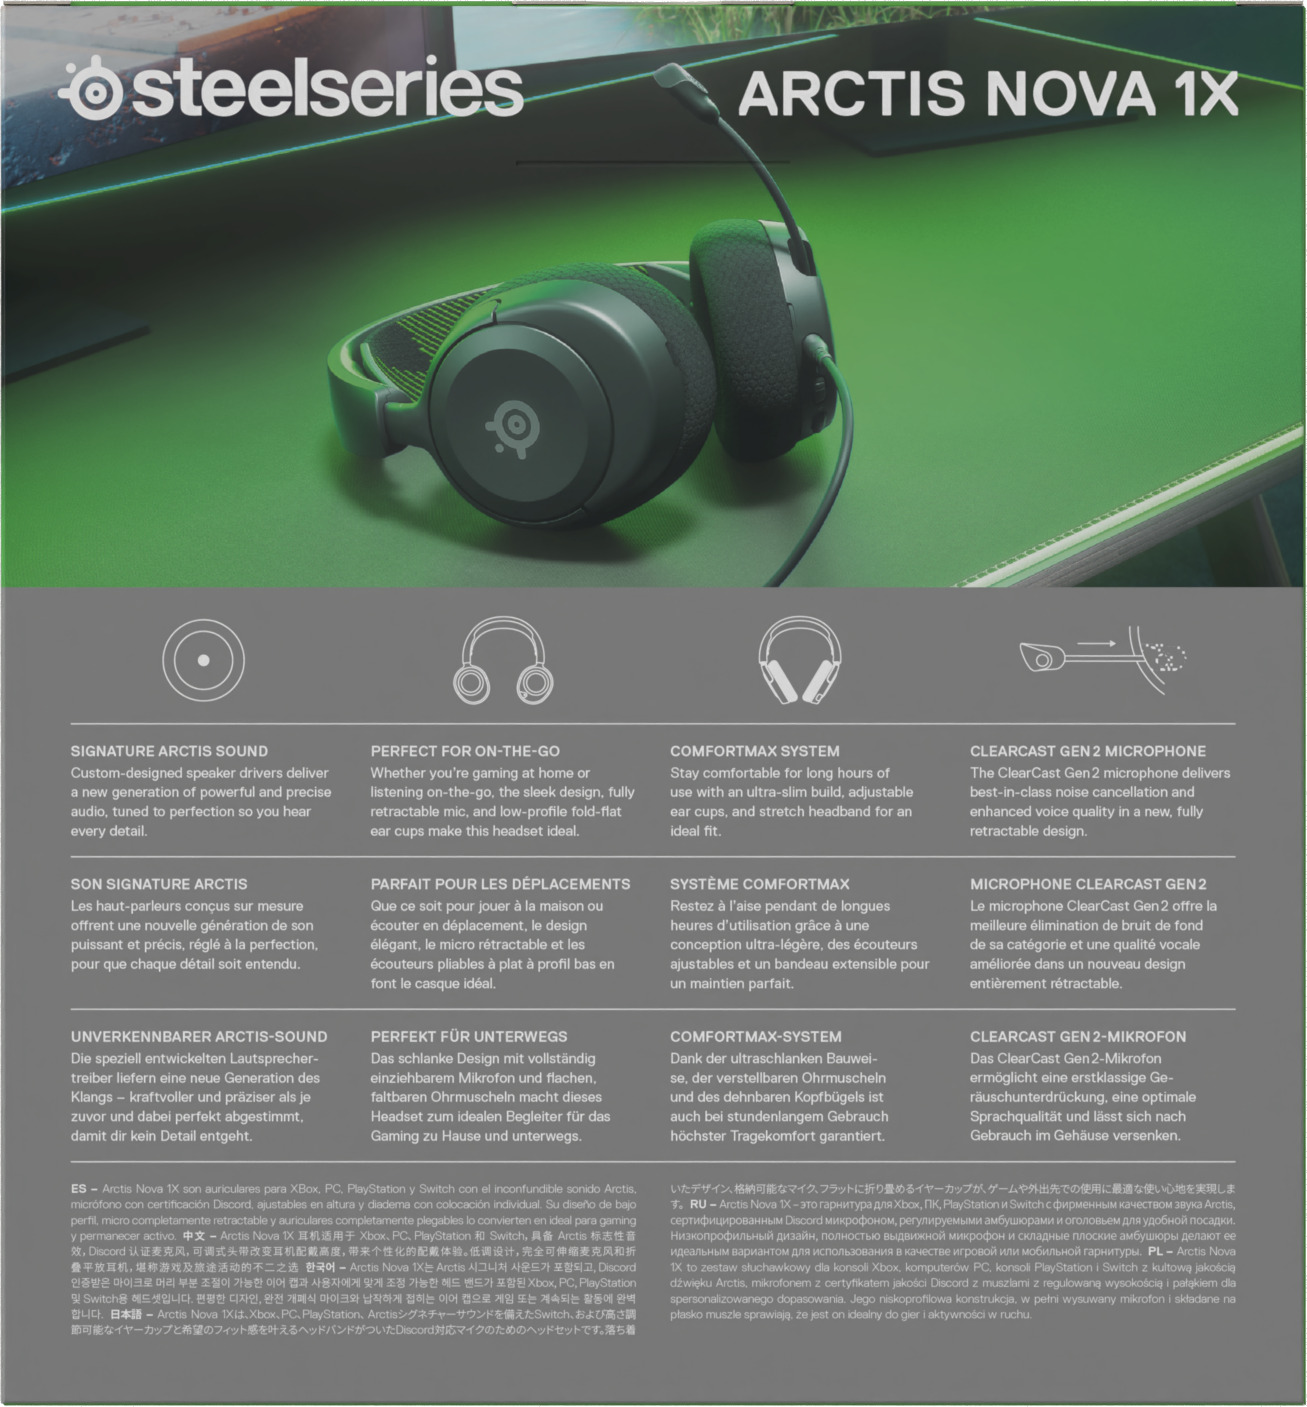 The Arctis Nova Pro Wireless headset: powerful, innovative, revolutionary